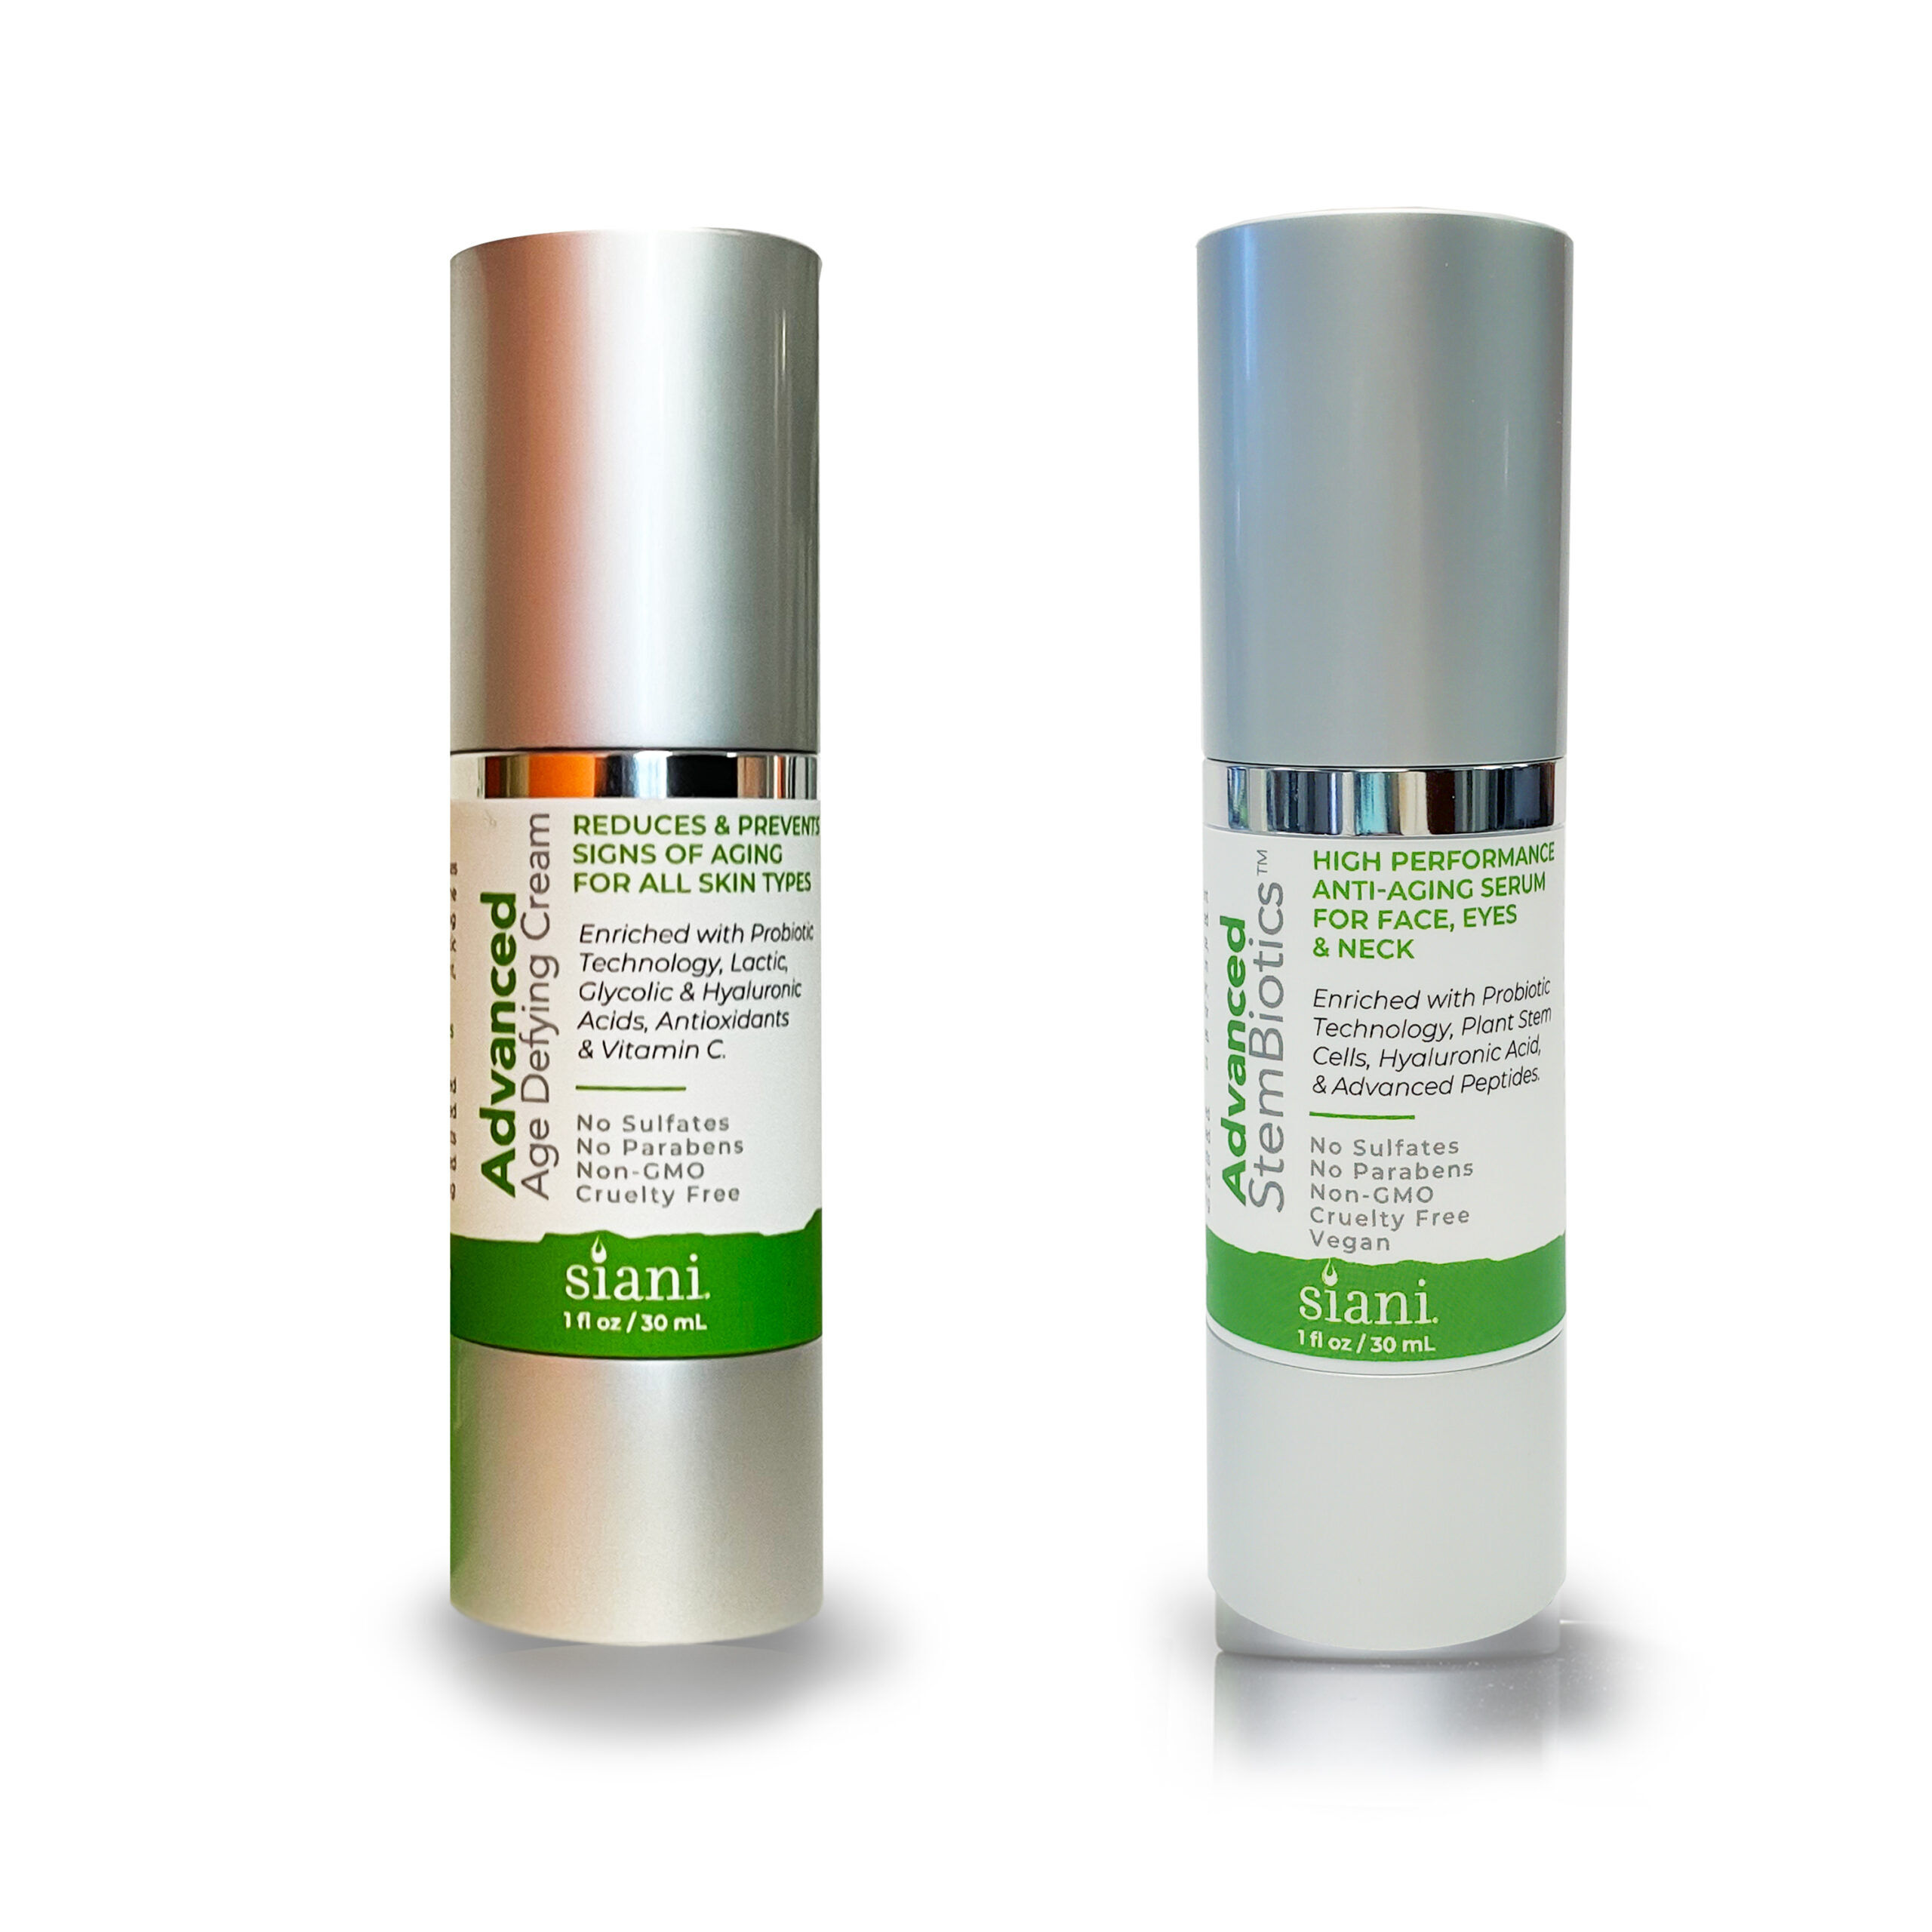 Siani Duo Natural Probiotic Advanced Anti-Aging Skin